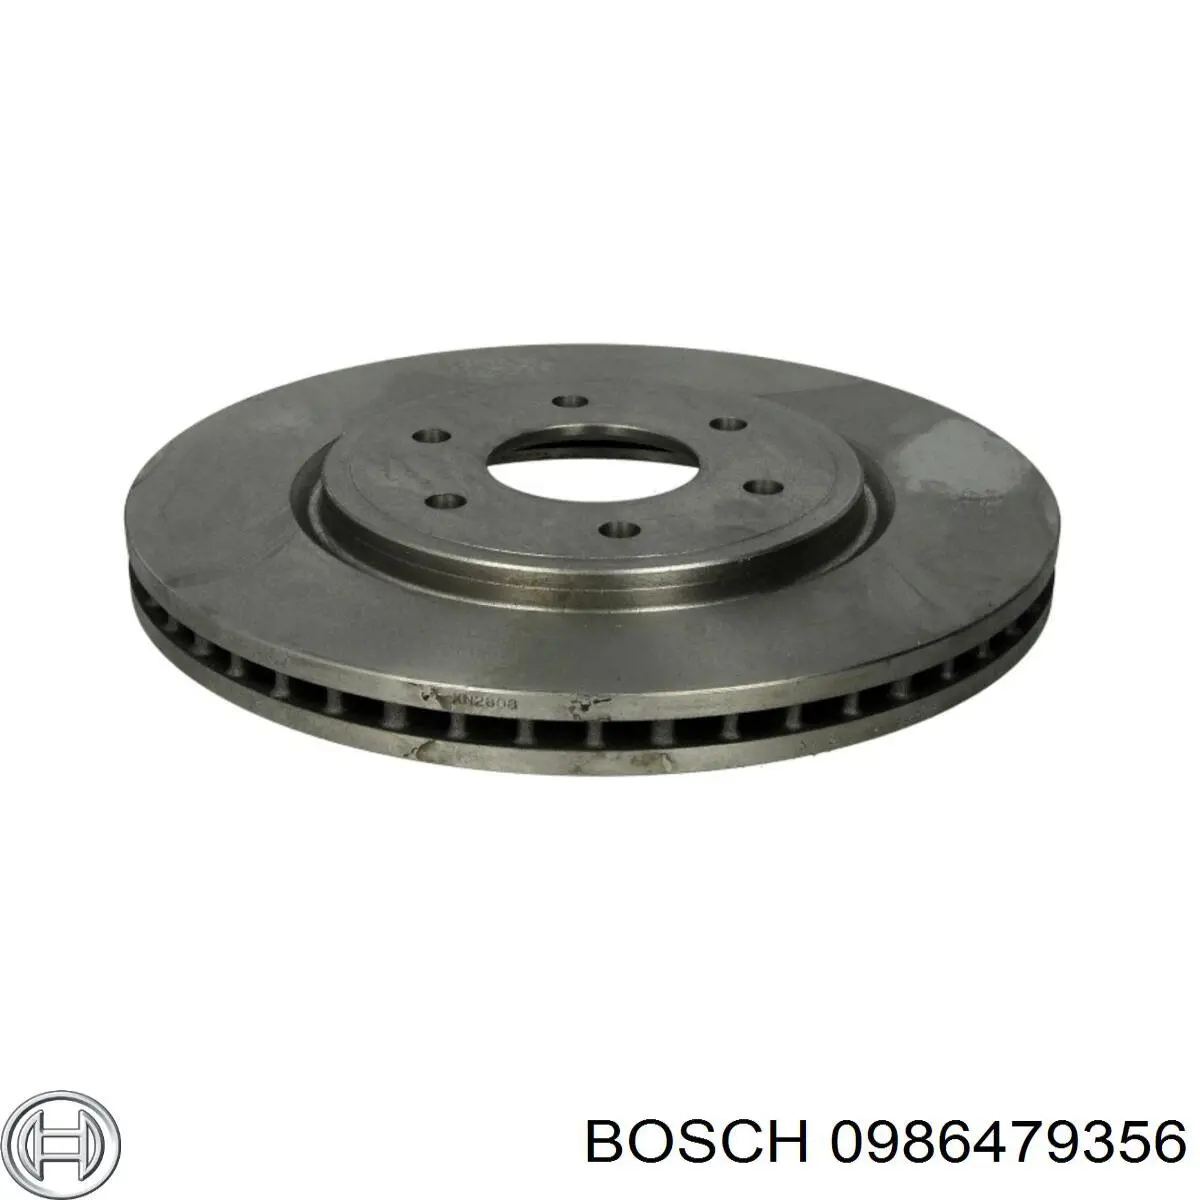 0986479356 Bosch disco de freno delantero